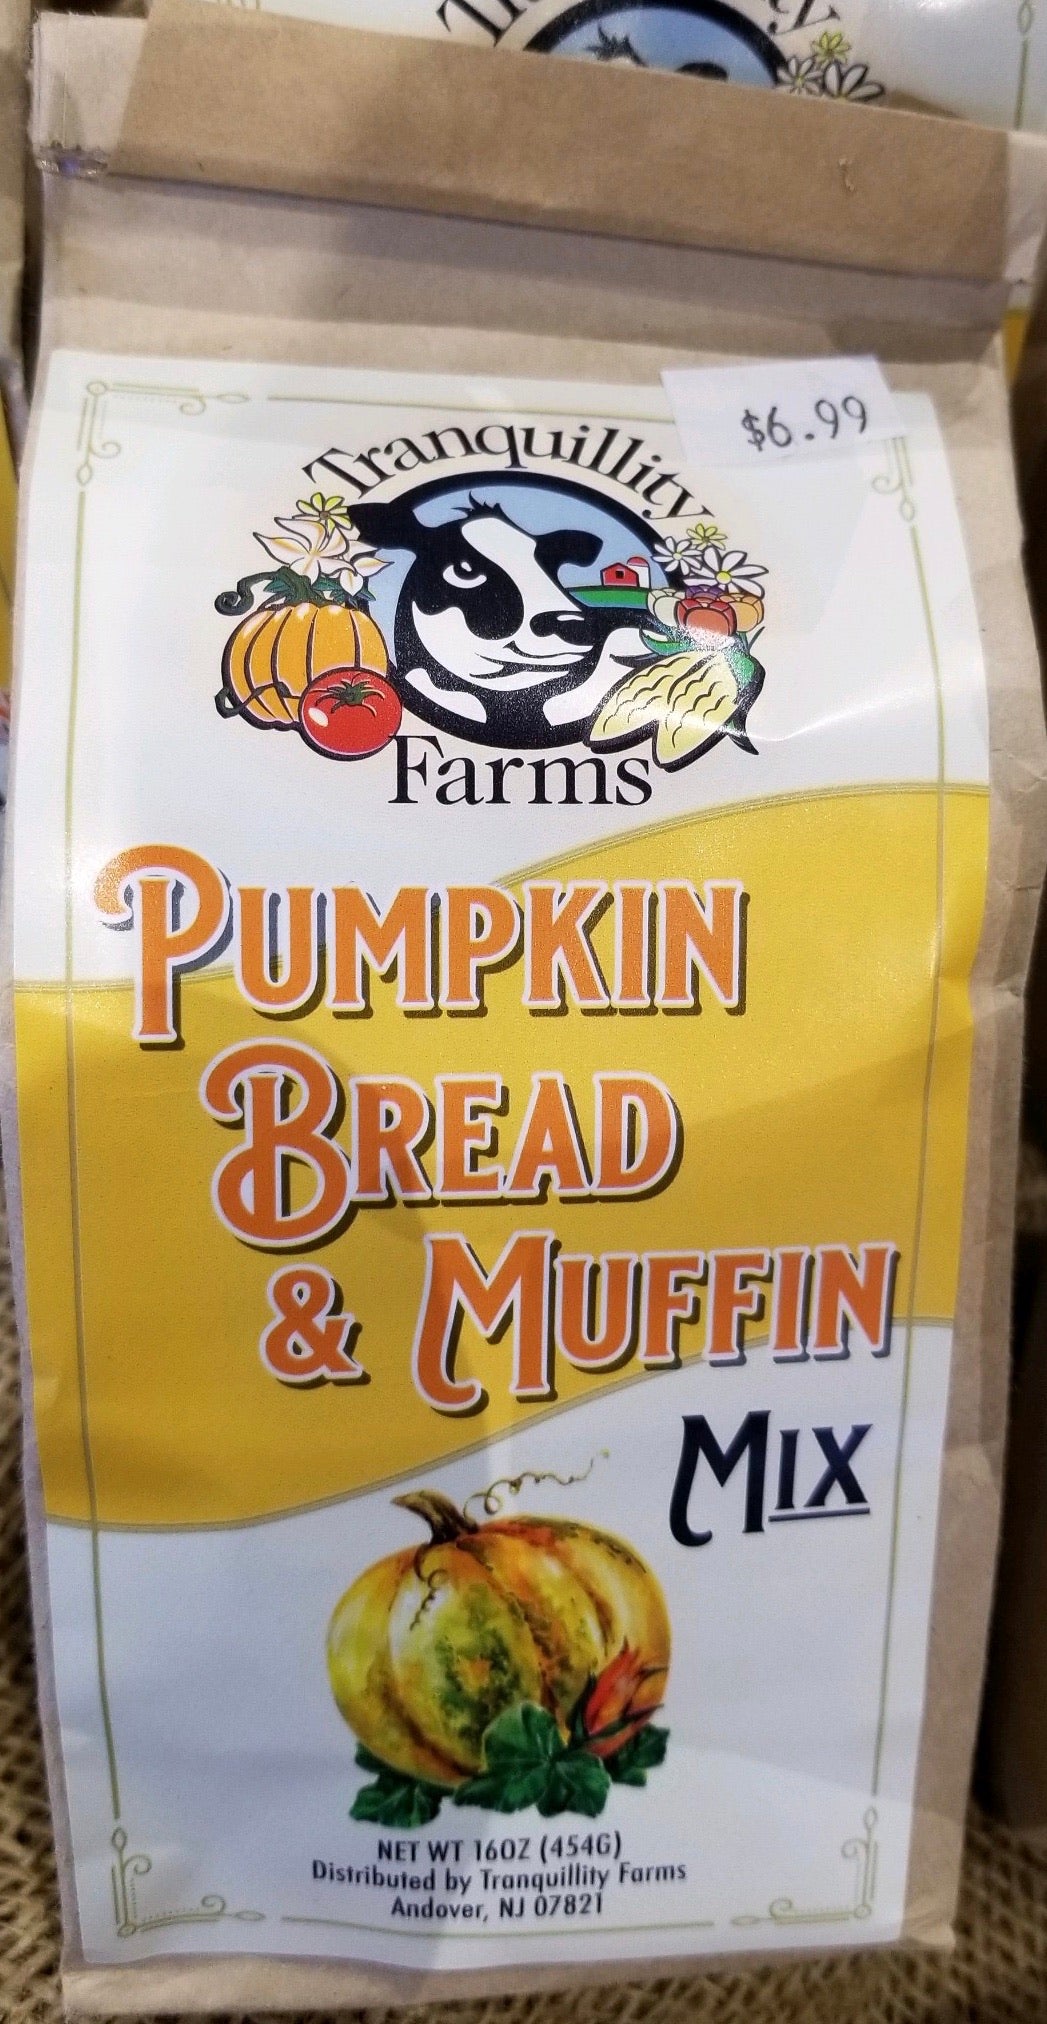 Pumpkin bread & muffin mix